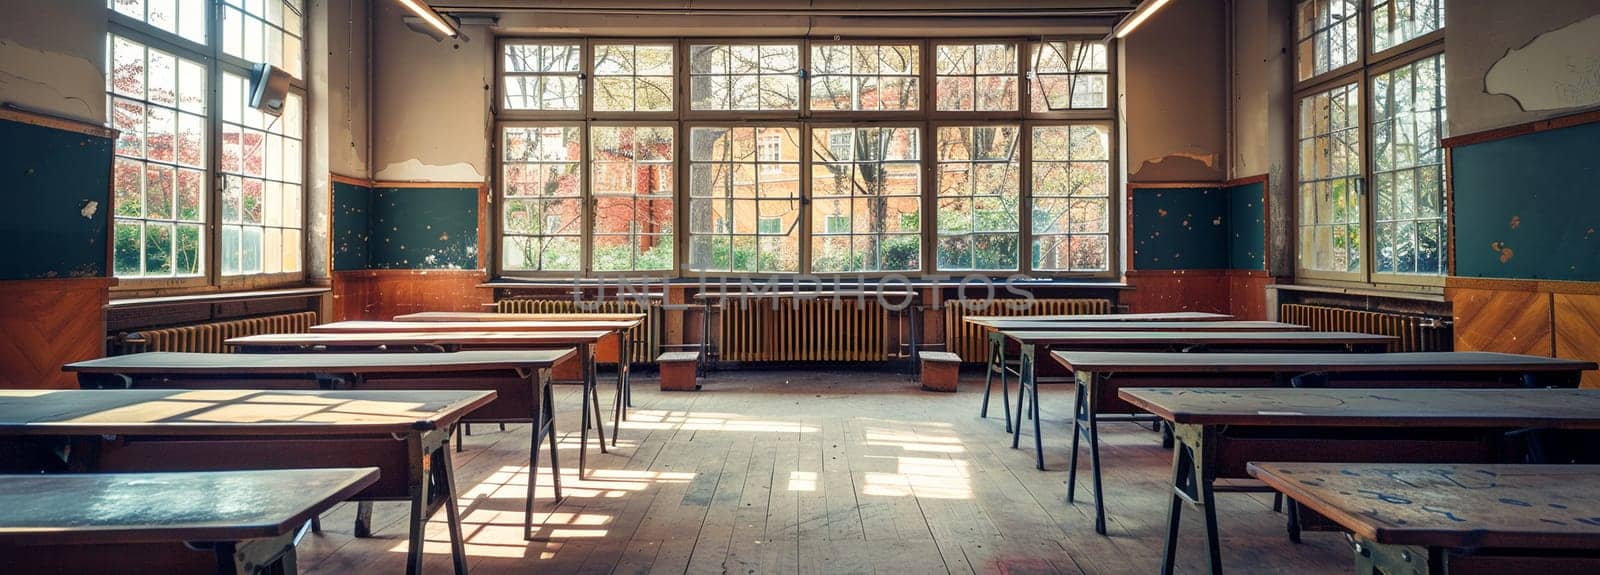 Empty vintage classroom featuring wooden desks, large windows, and sunlight casting shadows on hardwood floor.